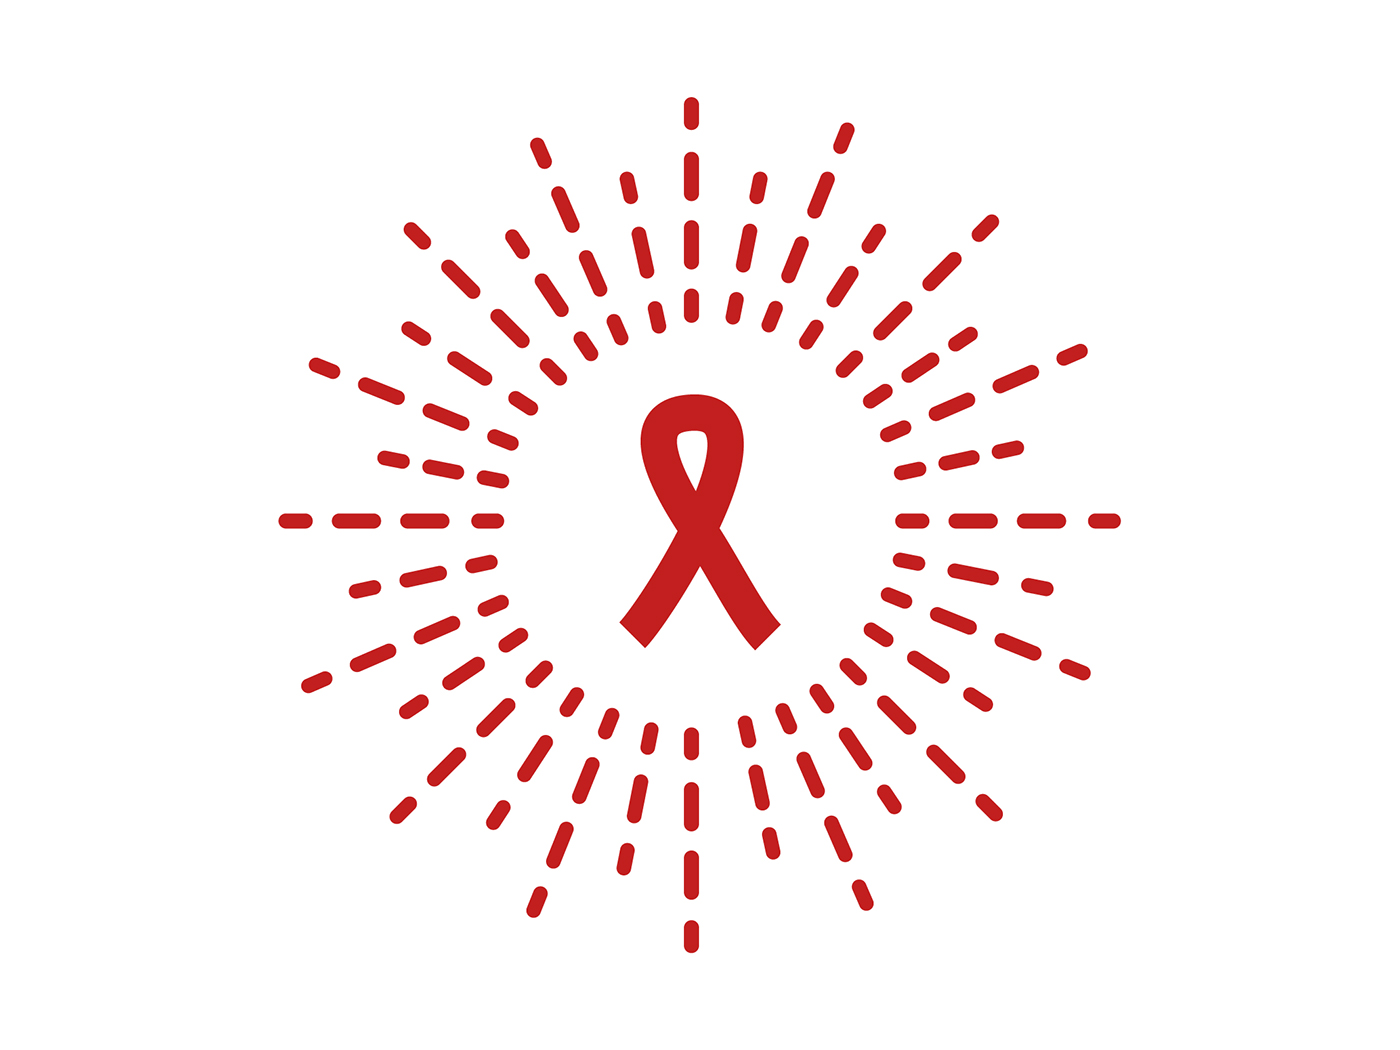 VIH sida red twitter virus de inmunodeficiencia